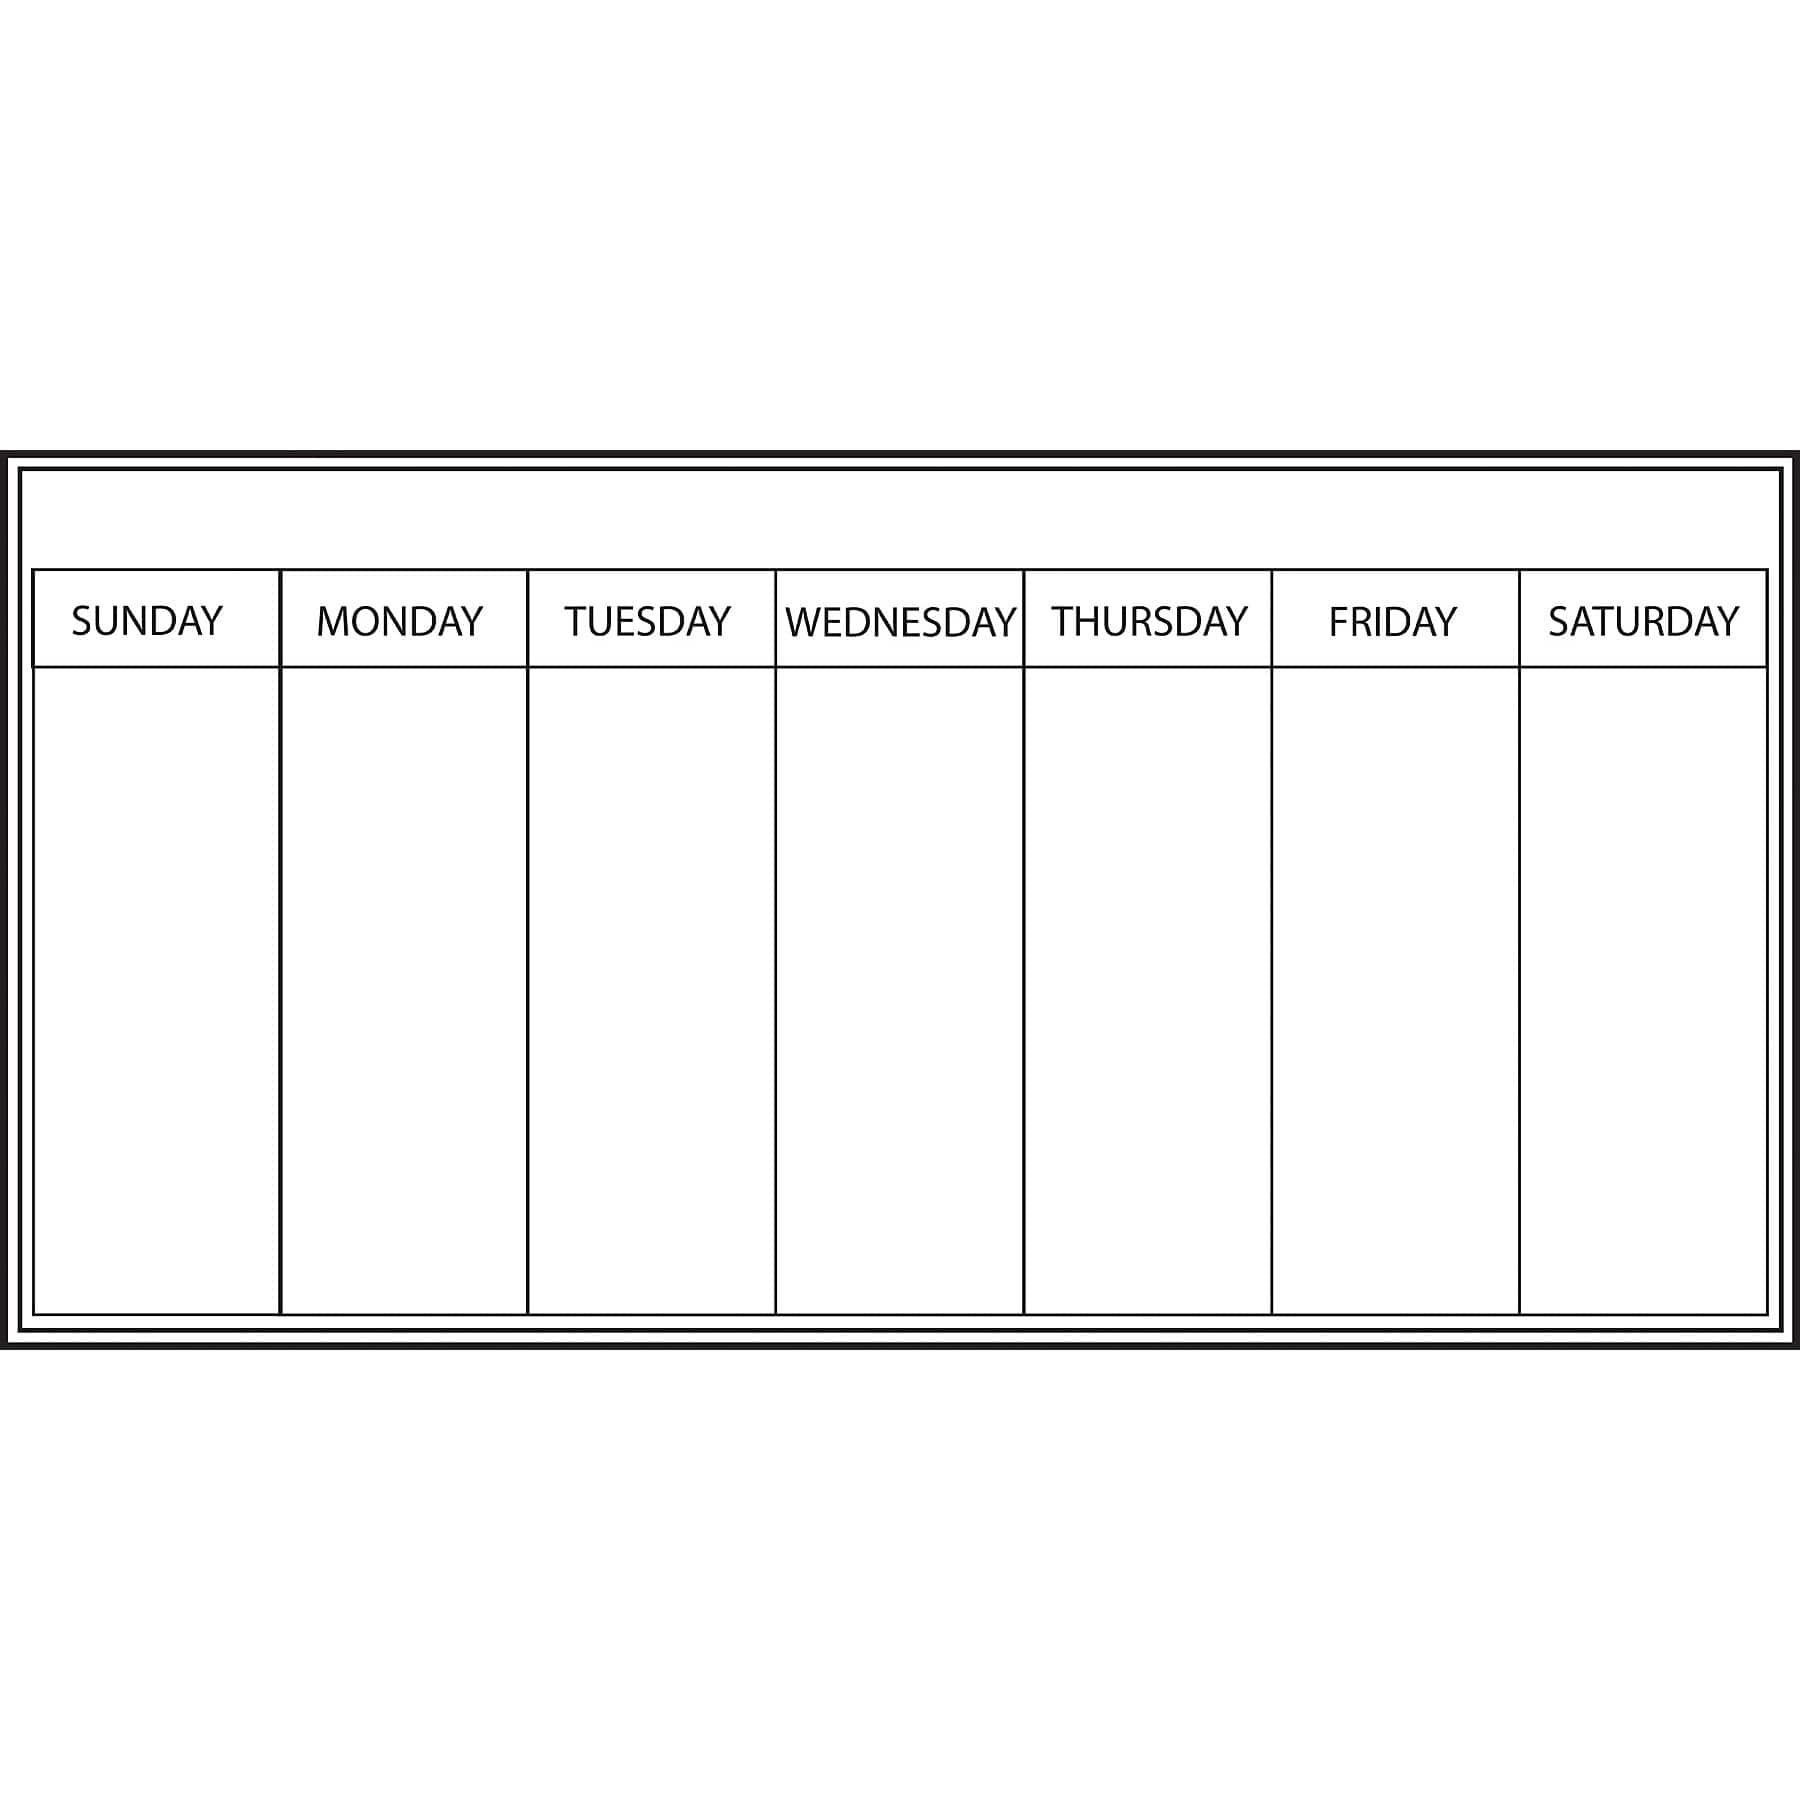 Wallpops Whiteboard Weekly Calendar Decal, 2ct.